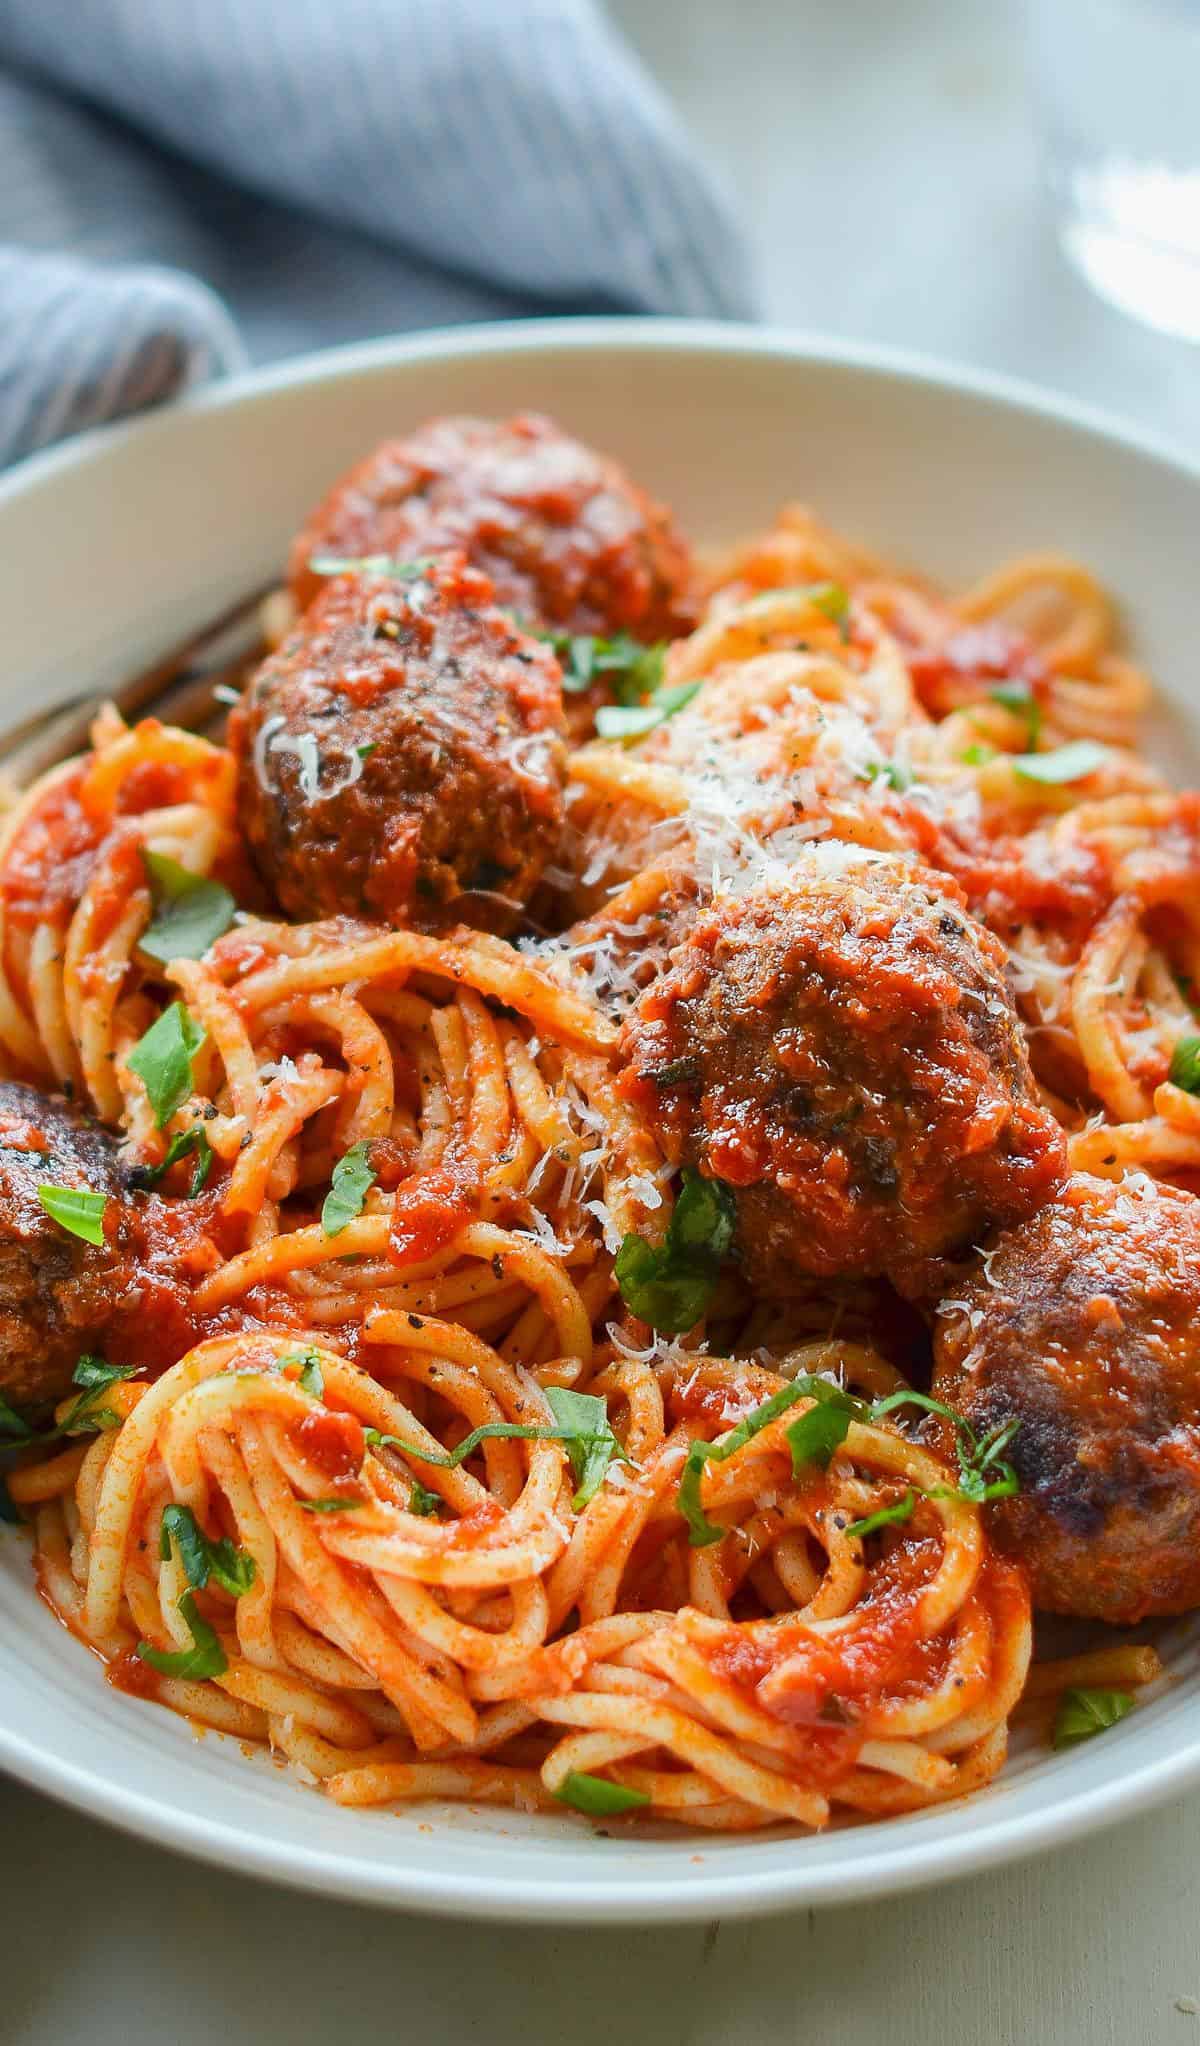  The ultimate comfort food - Italian spaghetti with meatballs!